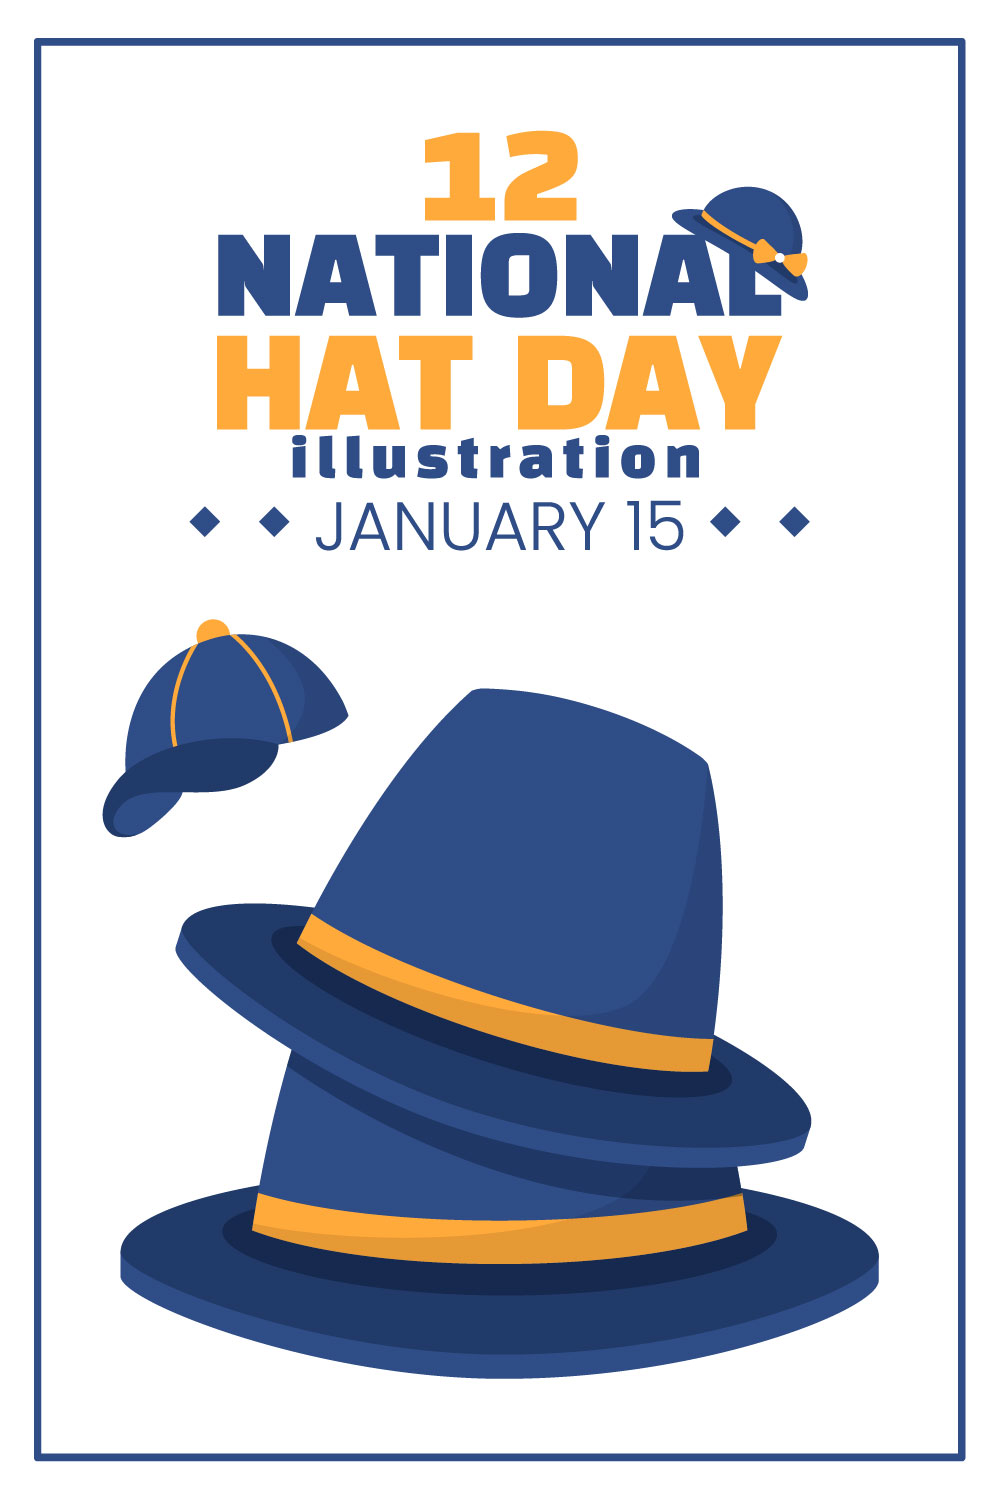 National Hat Day Illustration pinterest image.